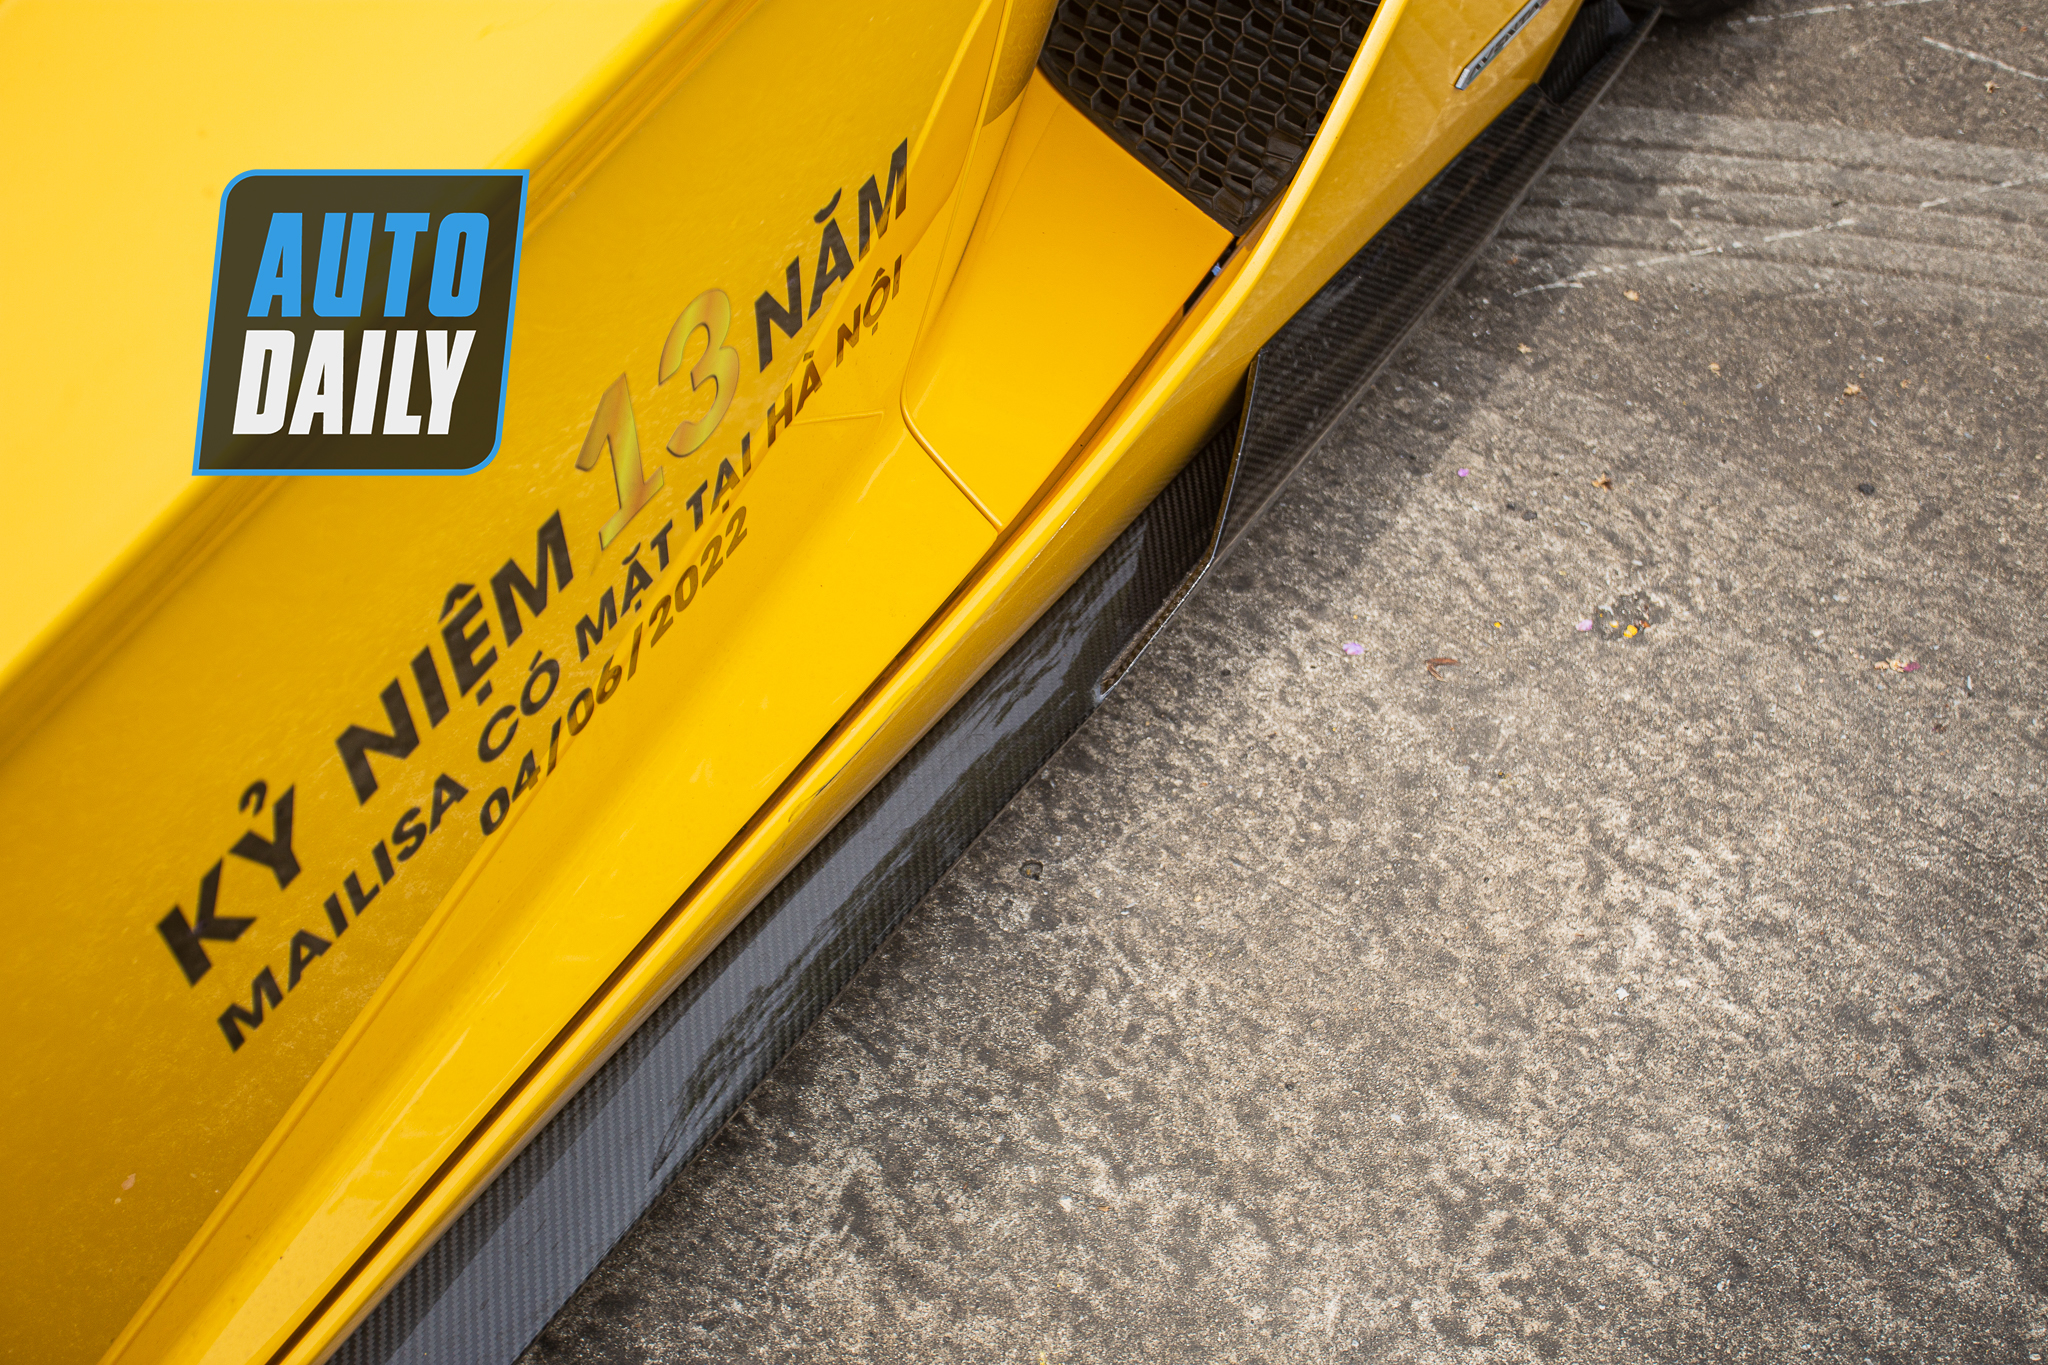 Chi tiết Lamborghini Aventador S độ khủng giá 45 tỷ lamborghini-aventador-s-45-ty-do-khung-autodaily-6.JPG